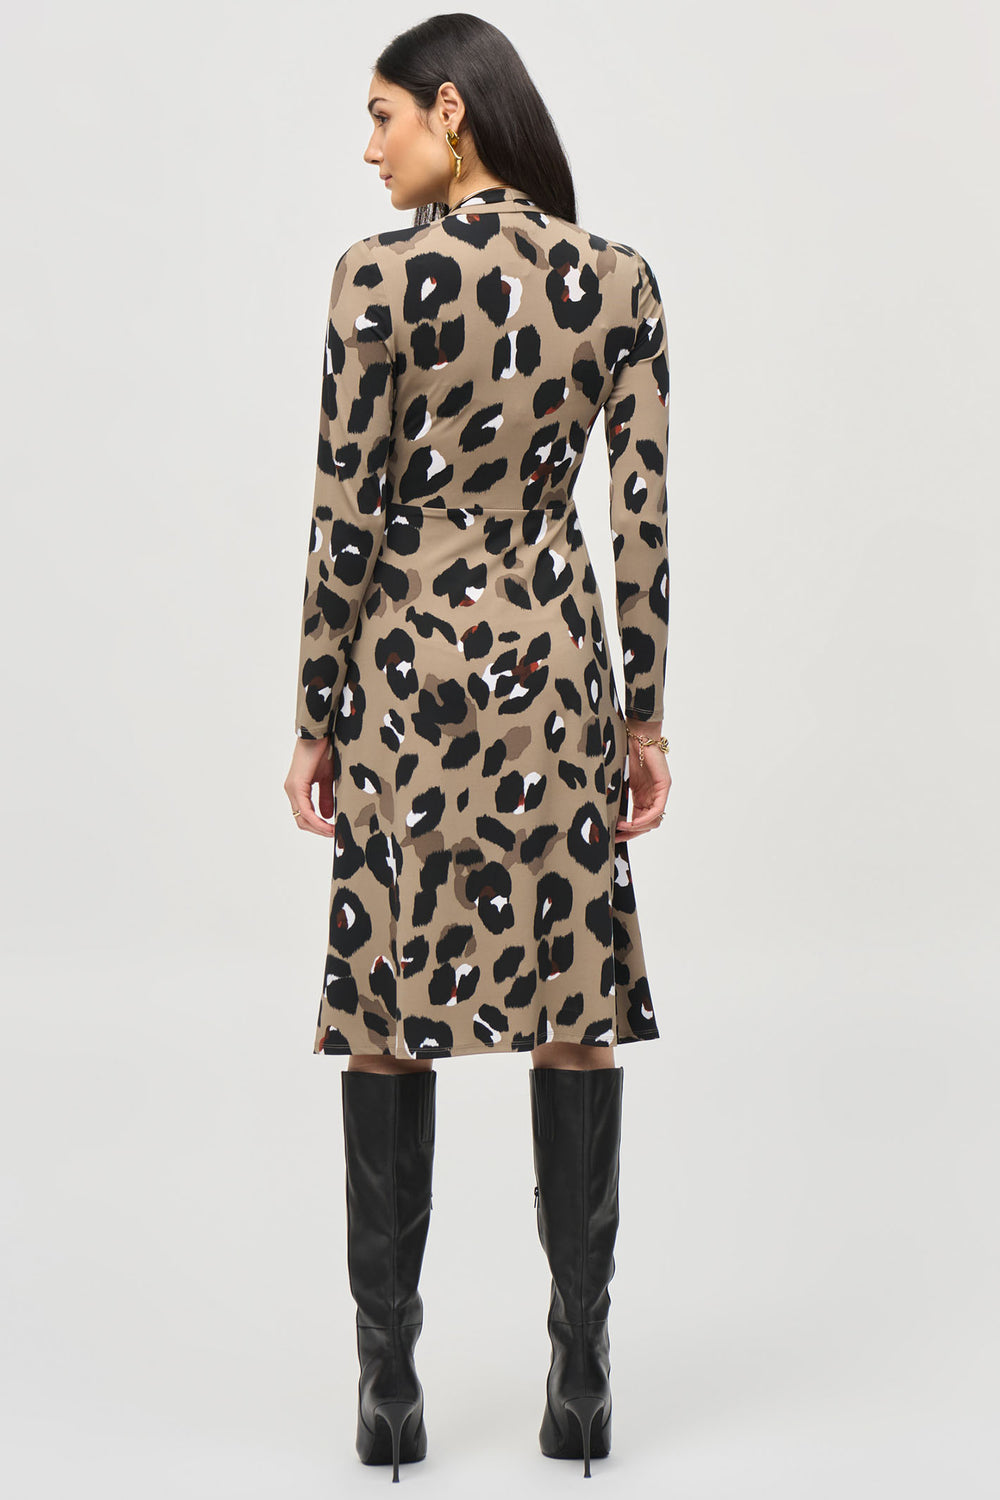 Joseph Ribkoff Wrap Style Dress Black Multi Print With Sleeves 243173 - Olivia Grace Fashion